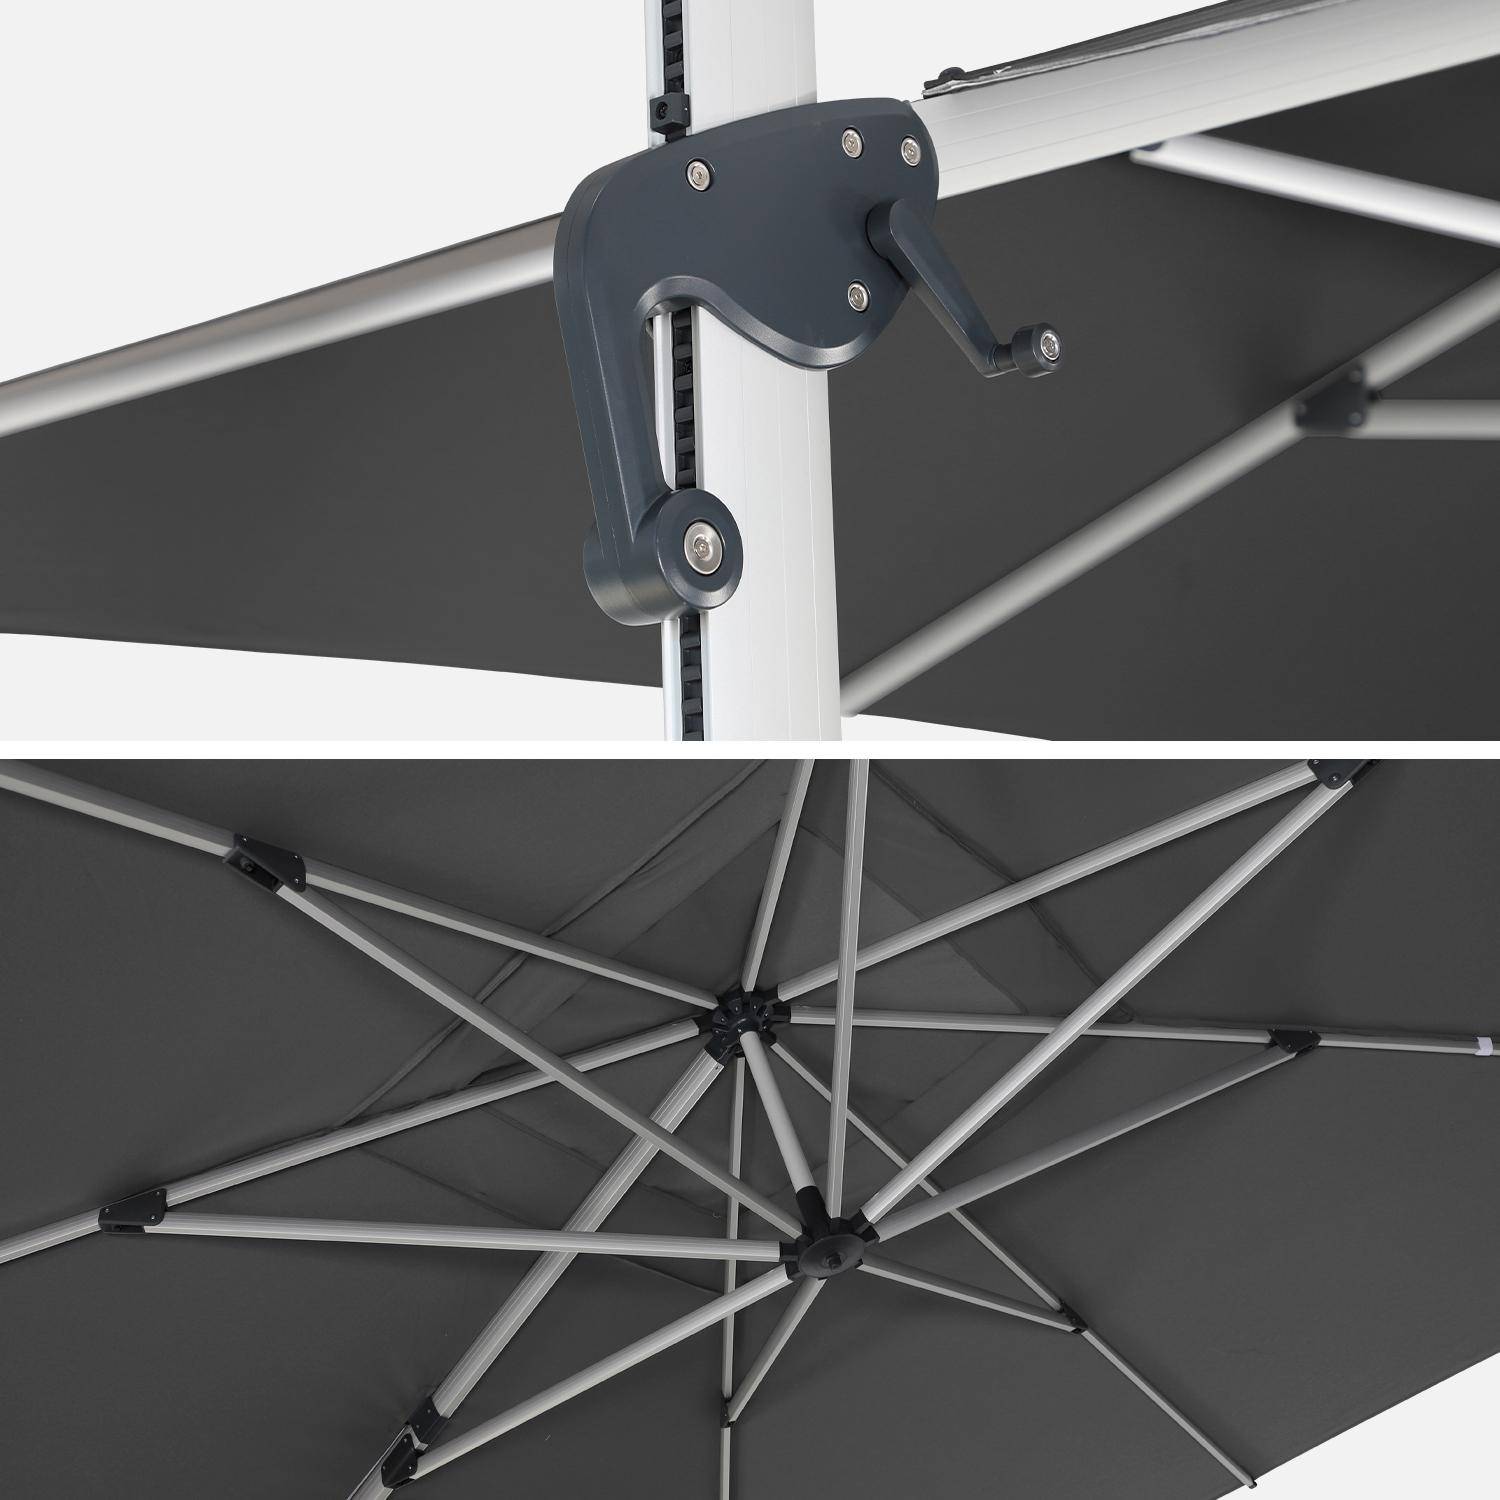 Topklasse parasol, 4x4m, grijs polyester doek, geanodiseerd aluminium frame, hoes inbegrepen Photo5